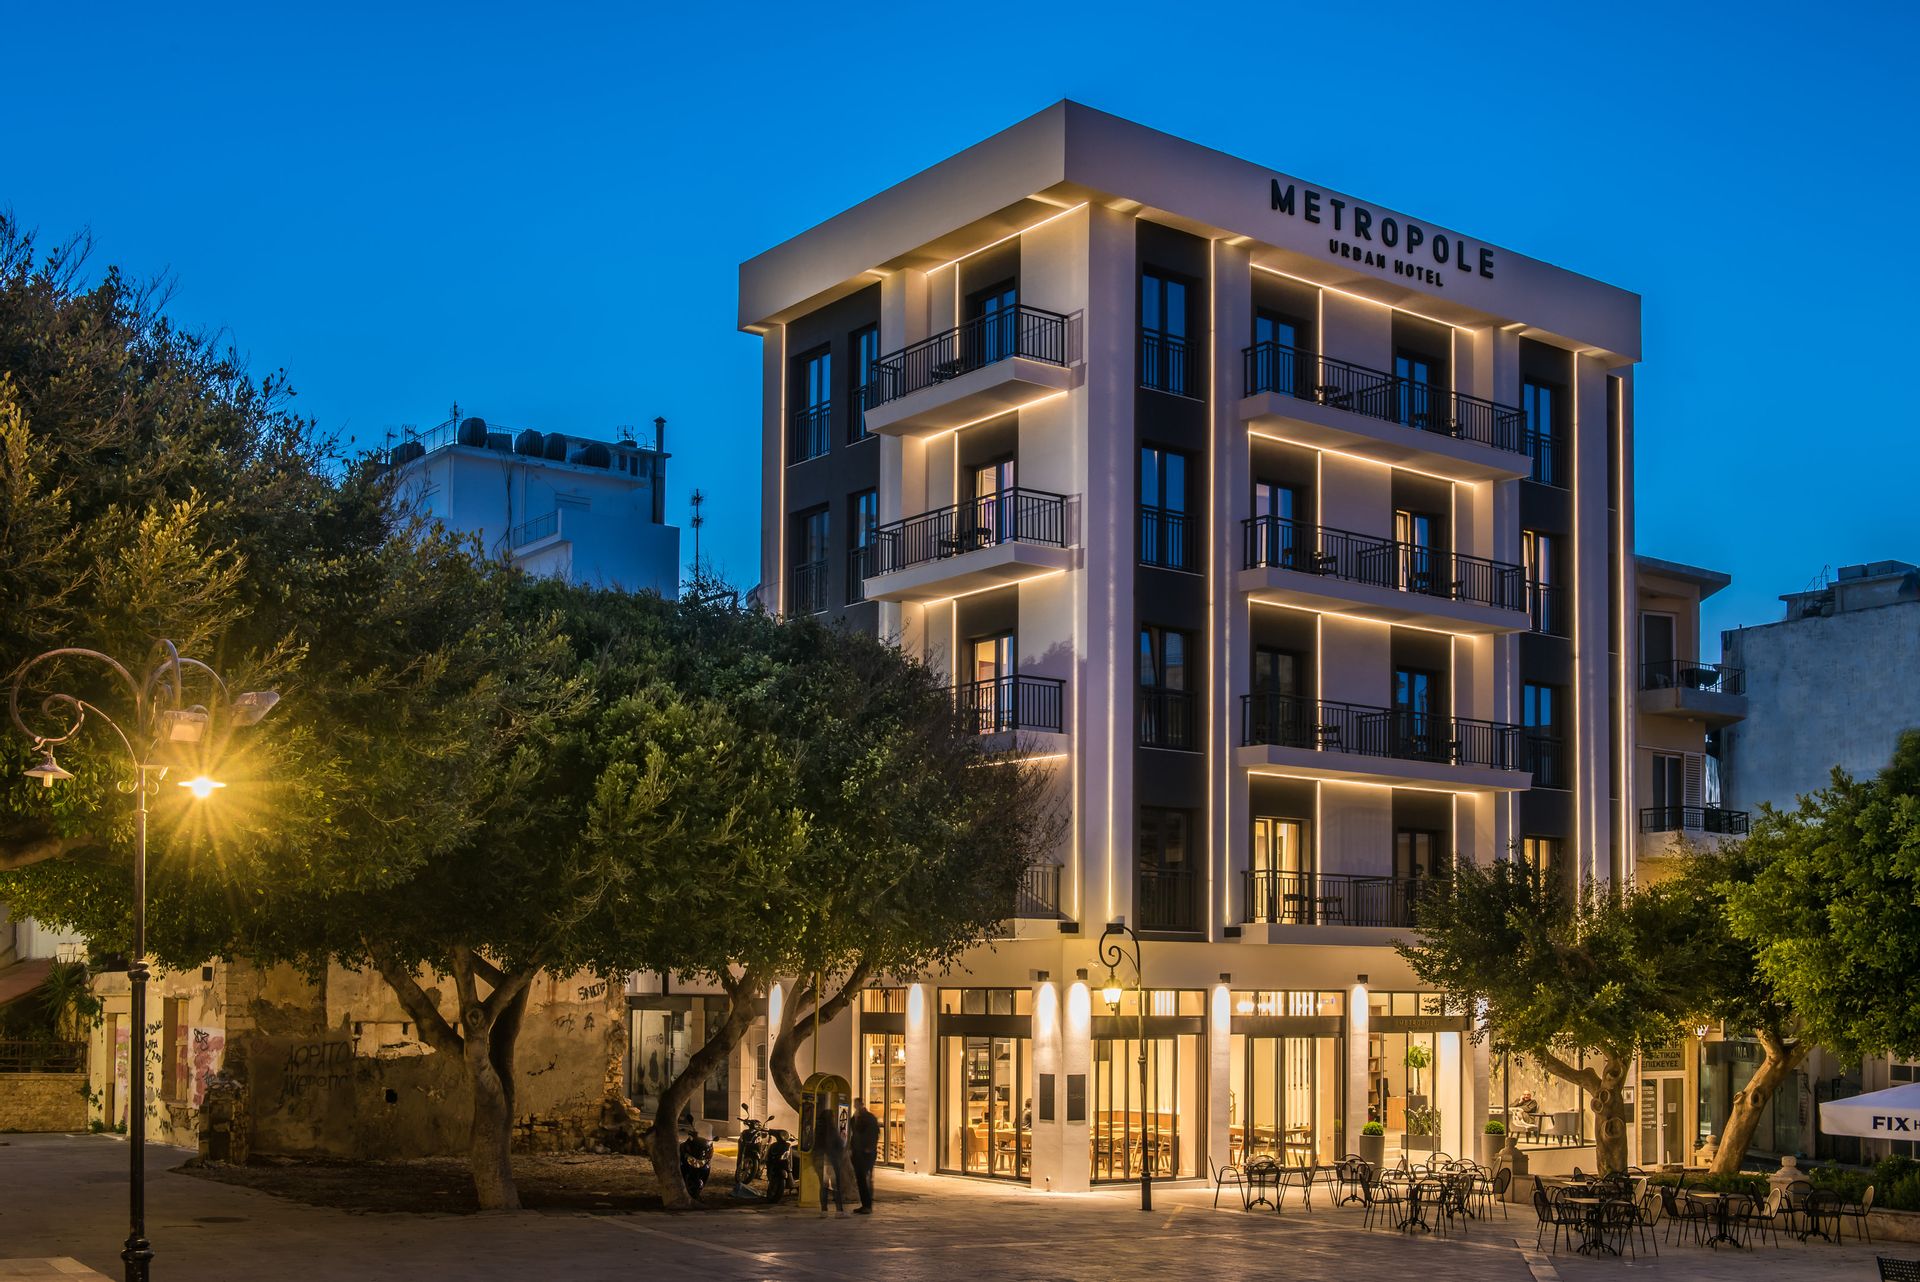 4* Metropole Urban Hotel - Ηράκλειο, Κρήτη ✦ 2 Ημέρες (1 Διανυκτέρευση) ✦ 2 άτομα ✦ 1 ✦ έως 30/09/2022 ✦ Στο κέντρο της πόλης!